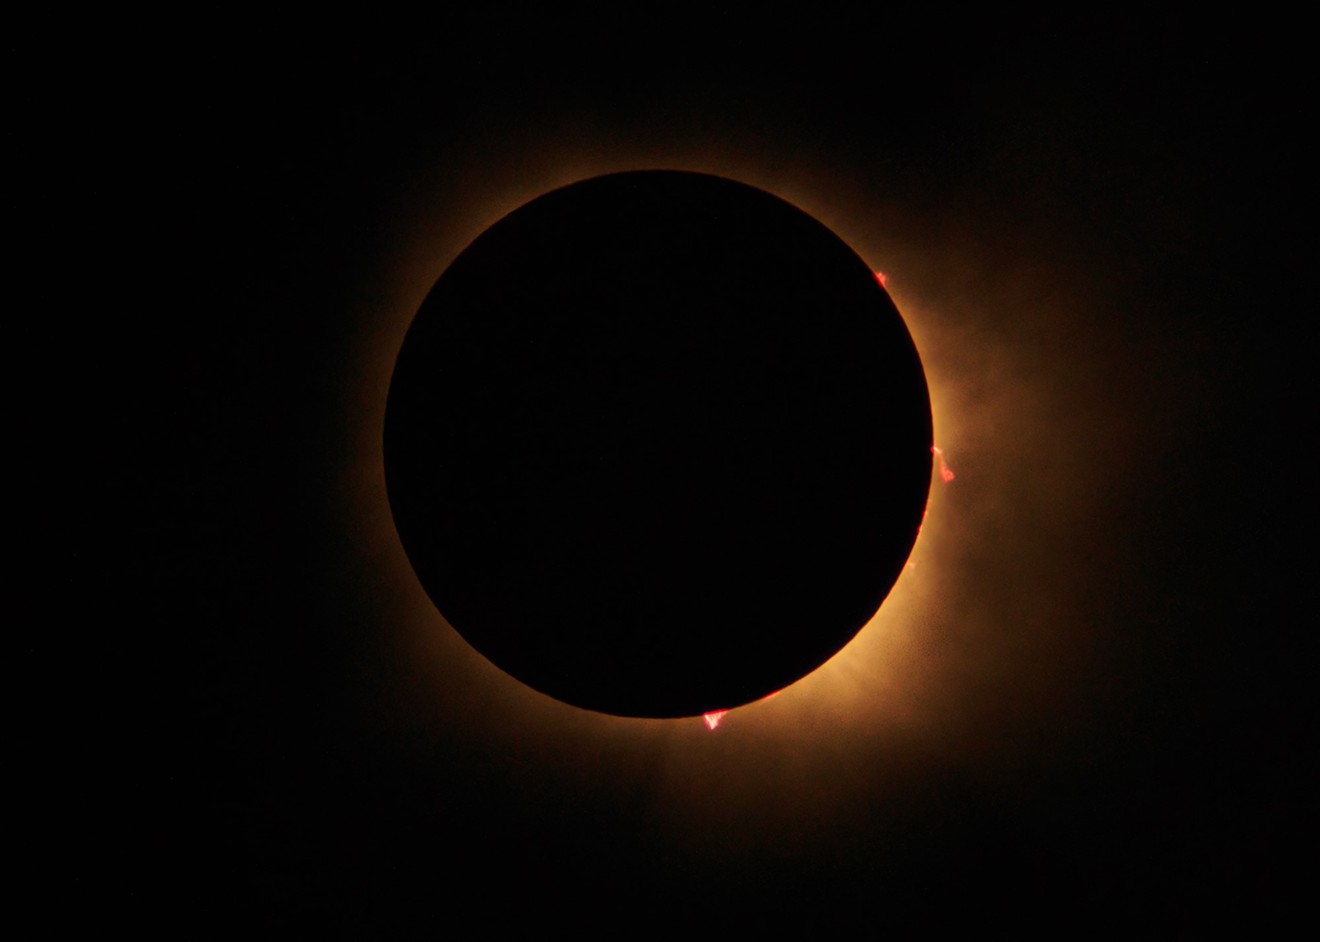 The eclipse reaches totality in Dallas.